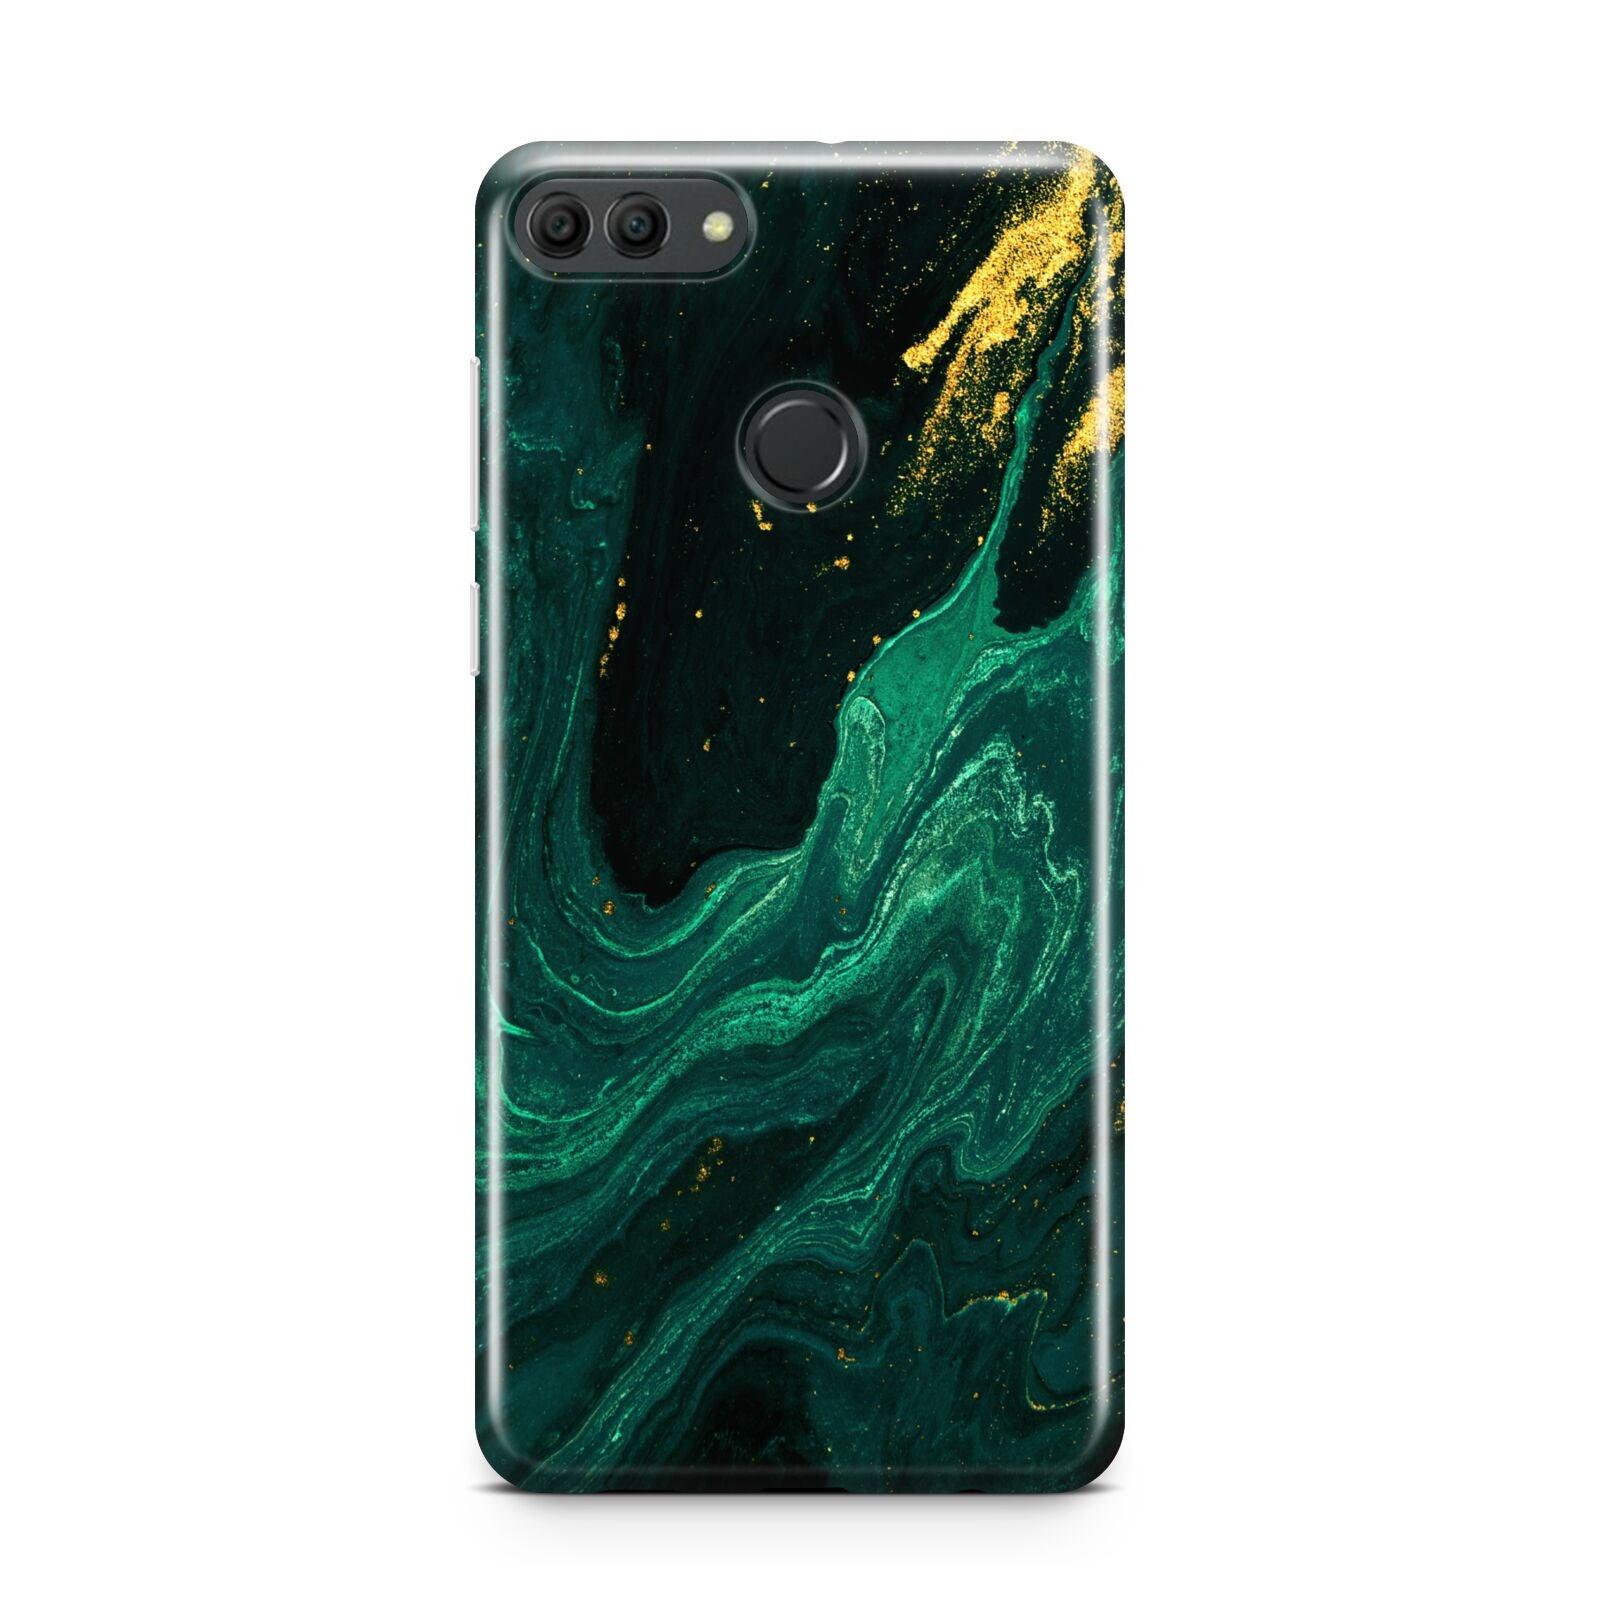 Emerald Green Huawei Y9 2018